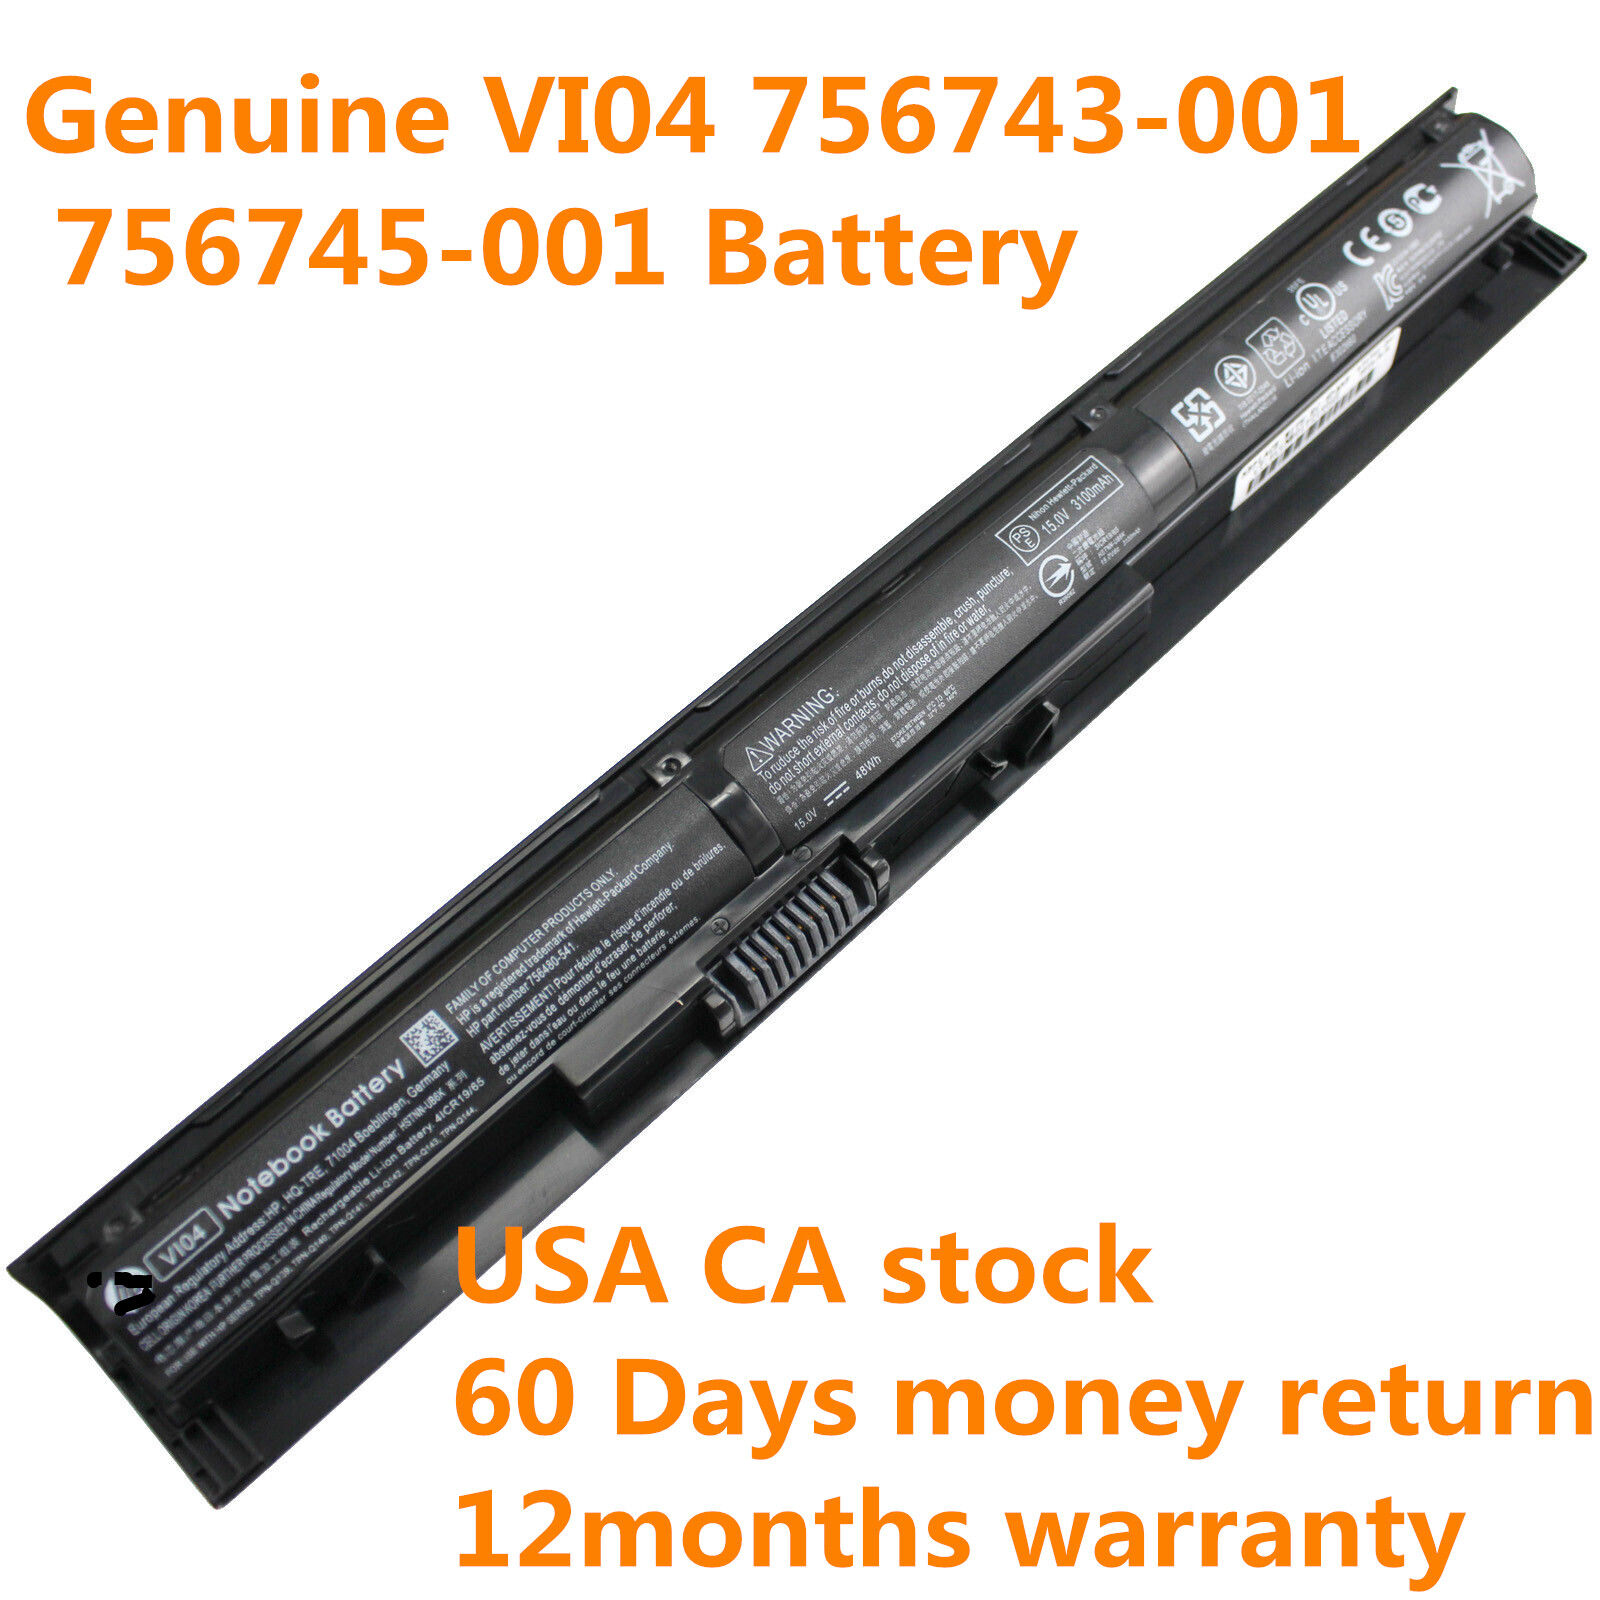 Genuine VI04 Battery HP Envy 14 15 17 Series 756743-001 756745-001 756479-421